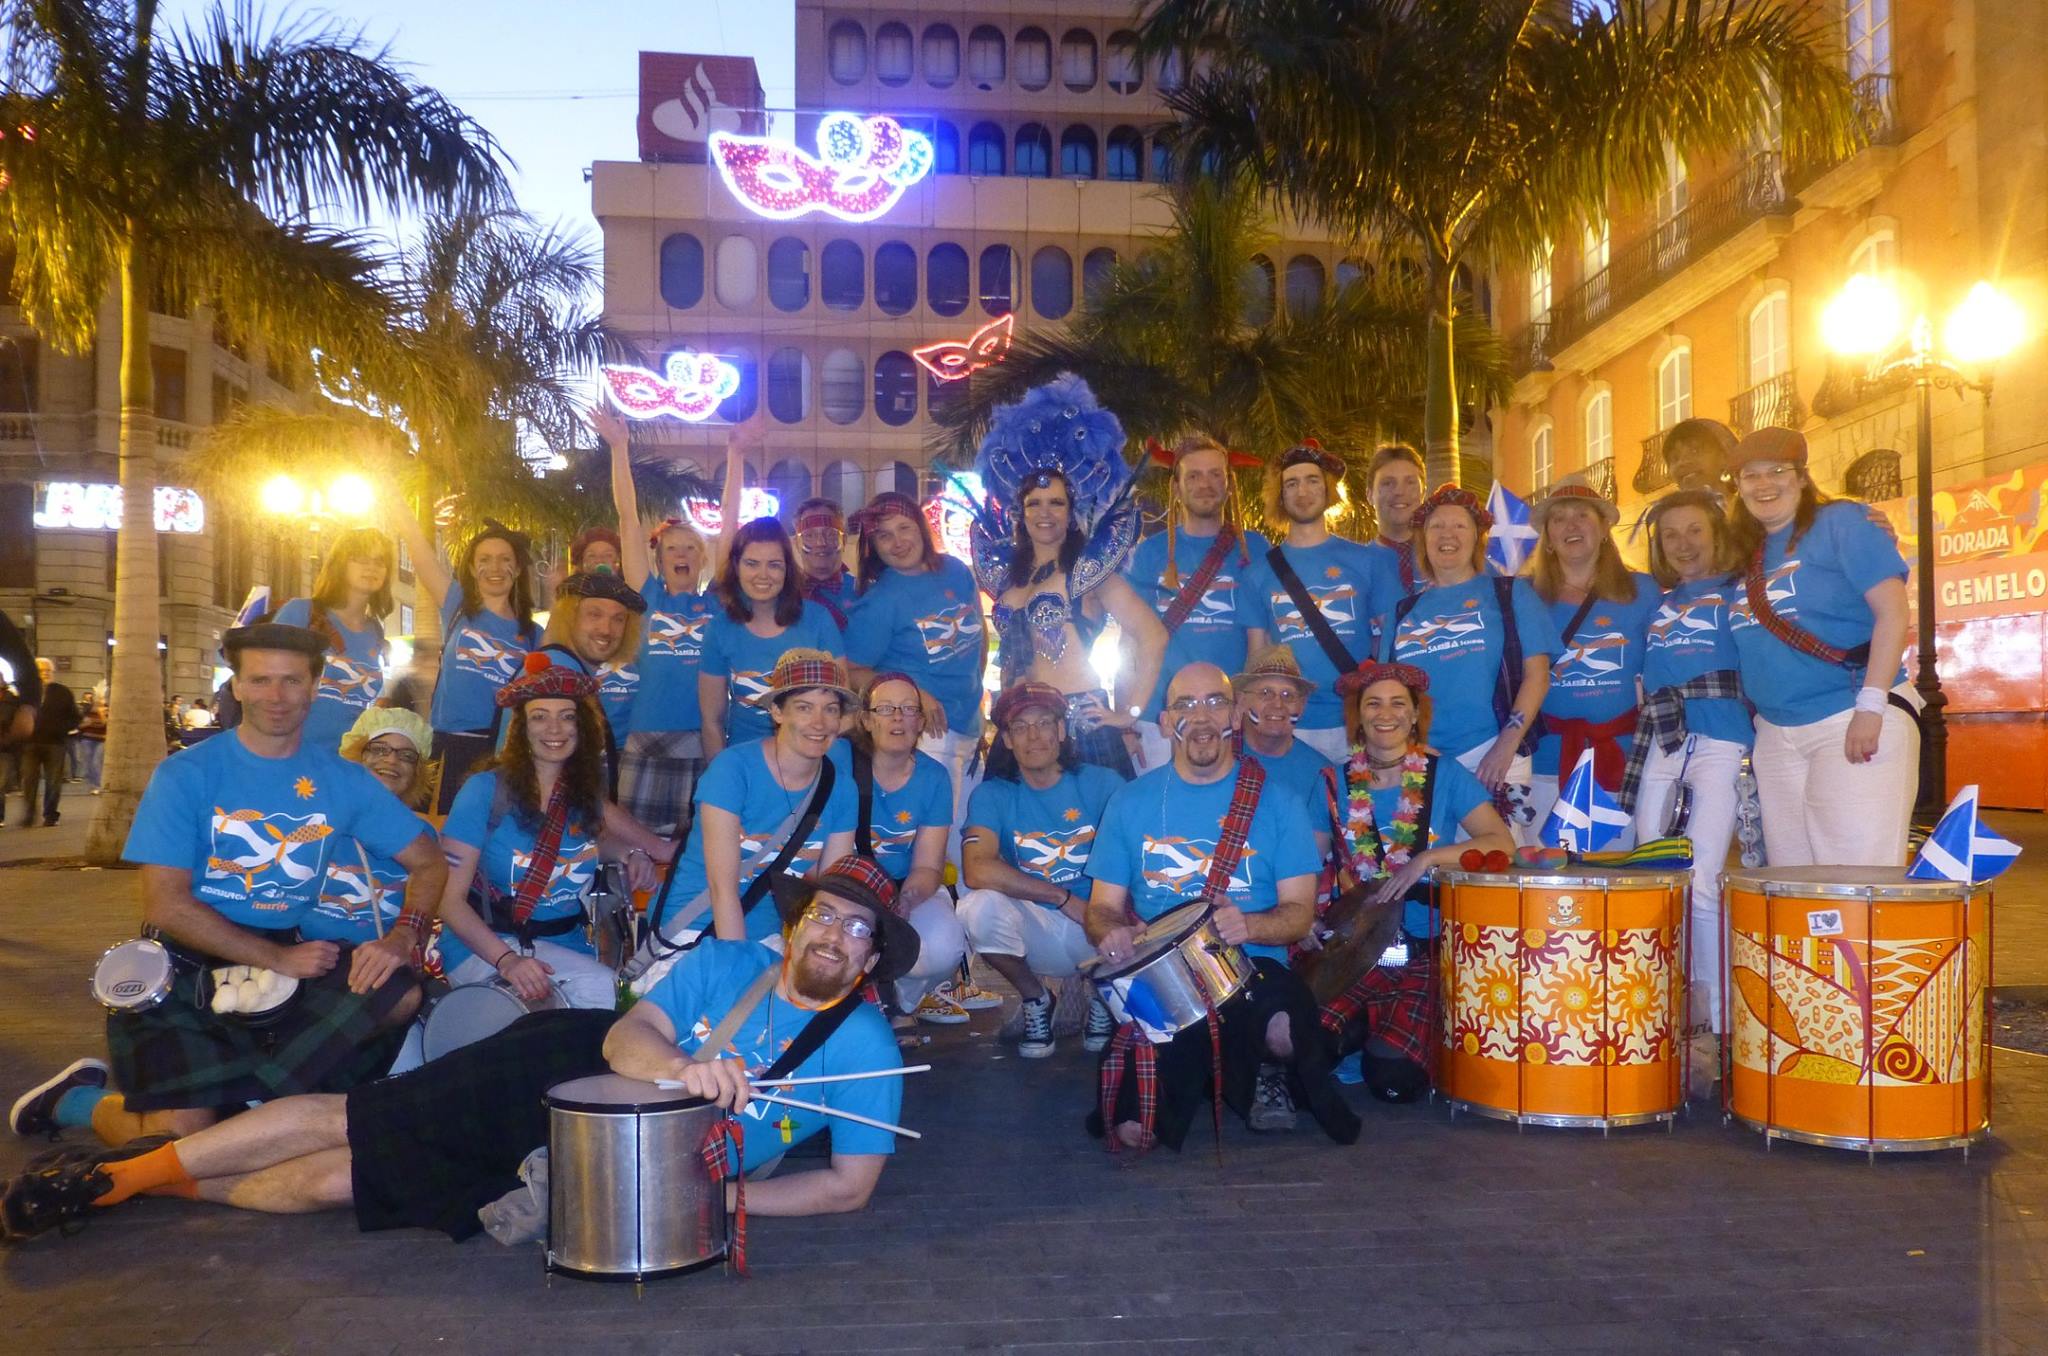 The Edinburgh Samba School at the Santa Cruz de Tenerife festival in 2014